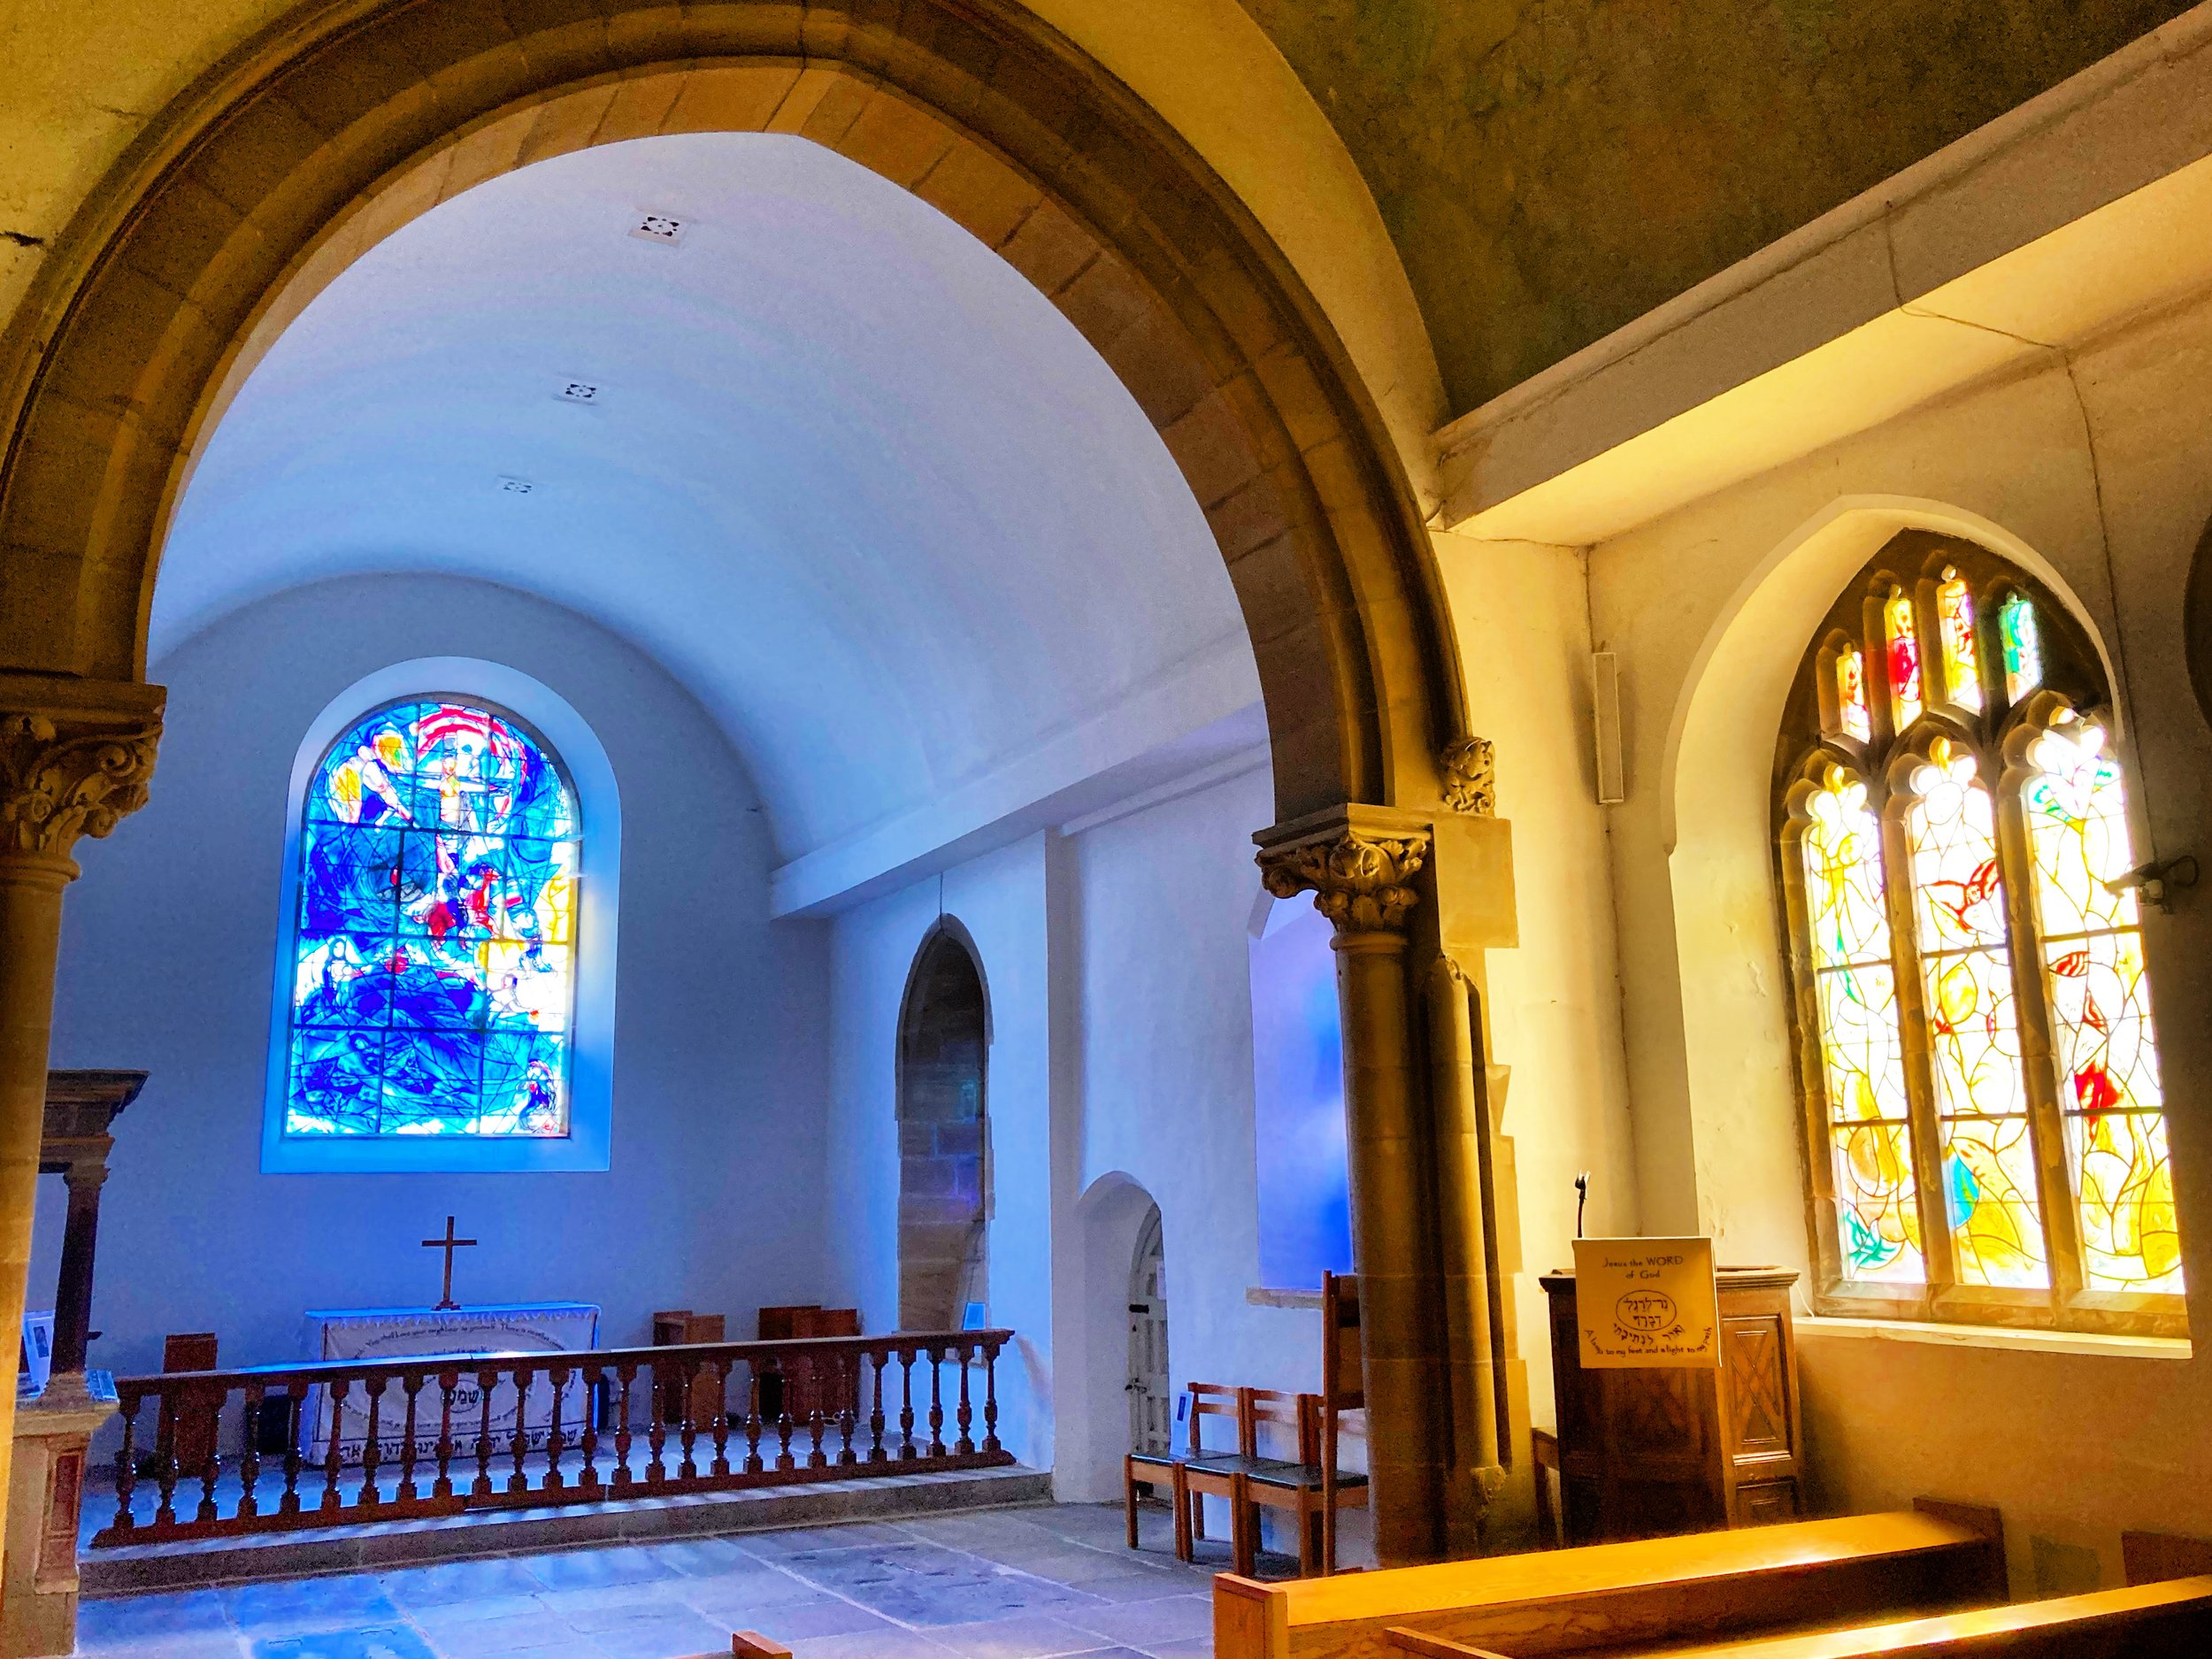 Walk Tonbridge - Walk 23 - The Trinity - All Saints Church - Tudeley - Kent - Marc Chagall -  windows - blue and gold.jpg